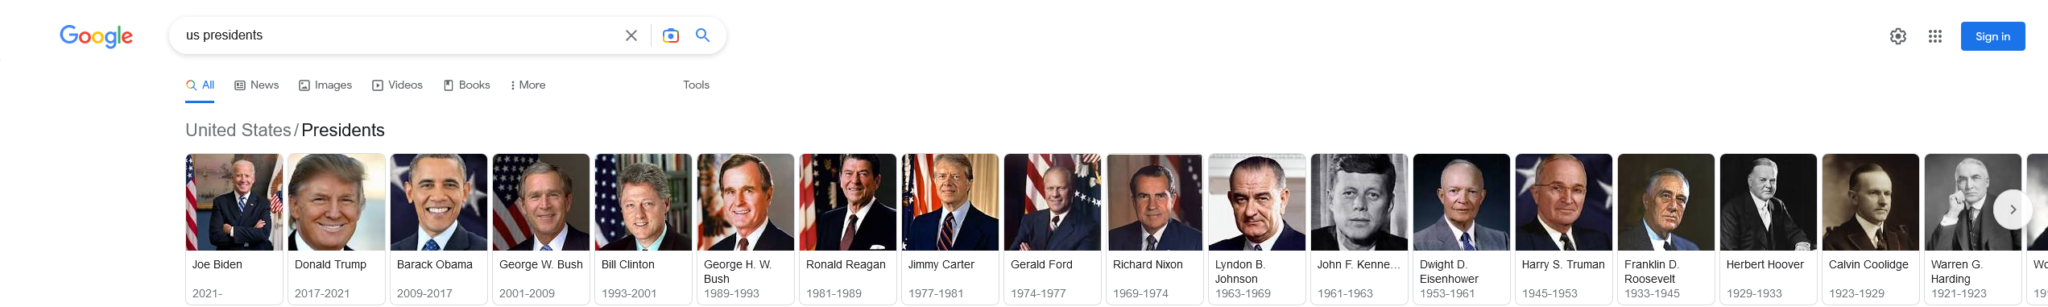 Query US presidents: Google mostra i presidenti USA al plurale